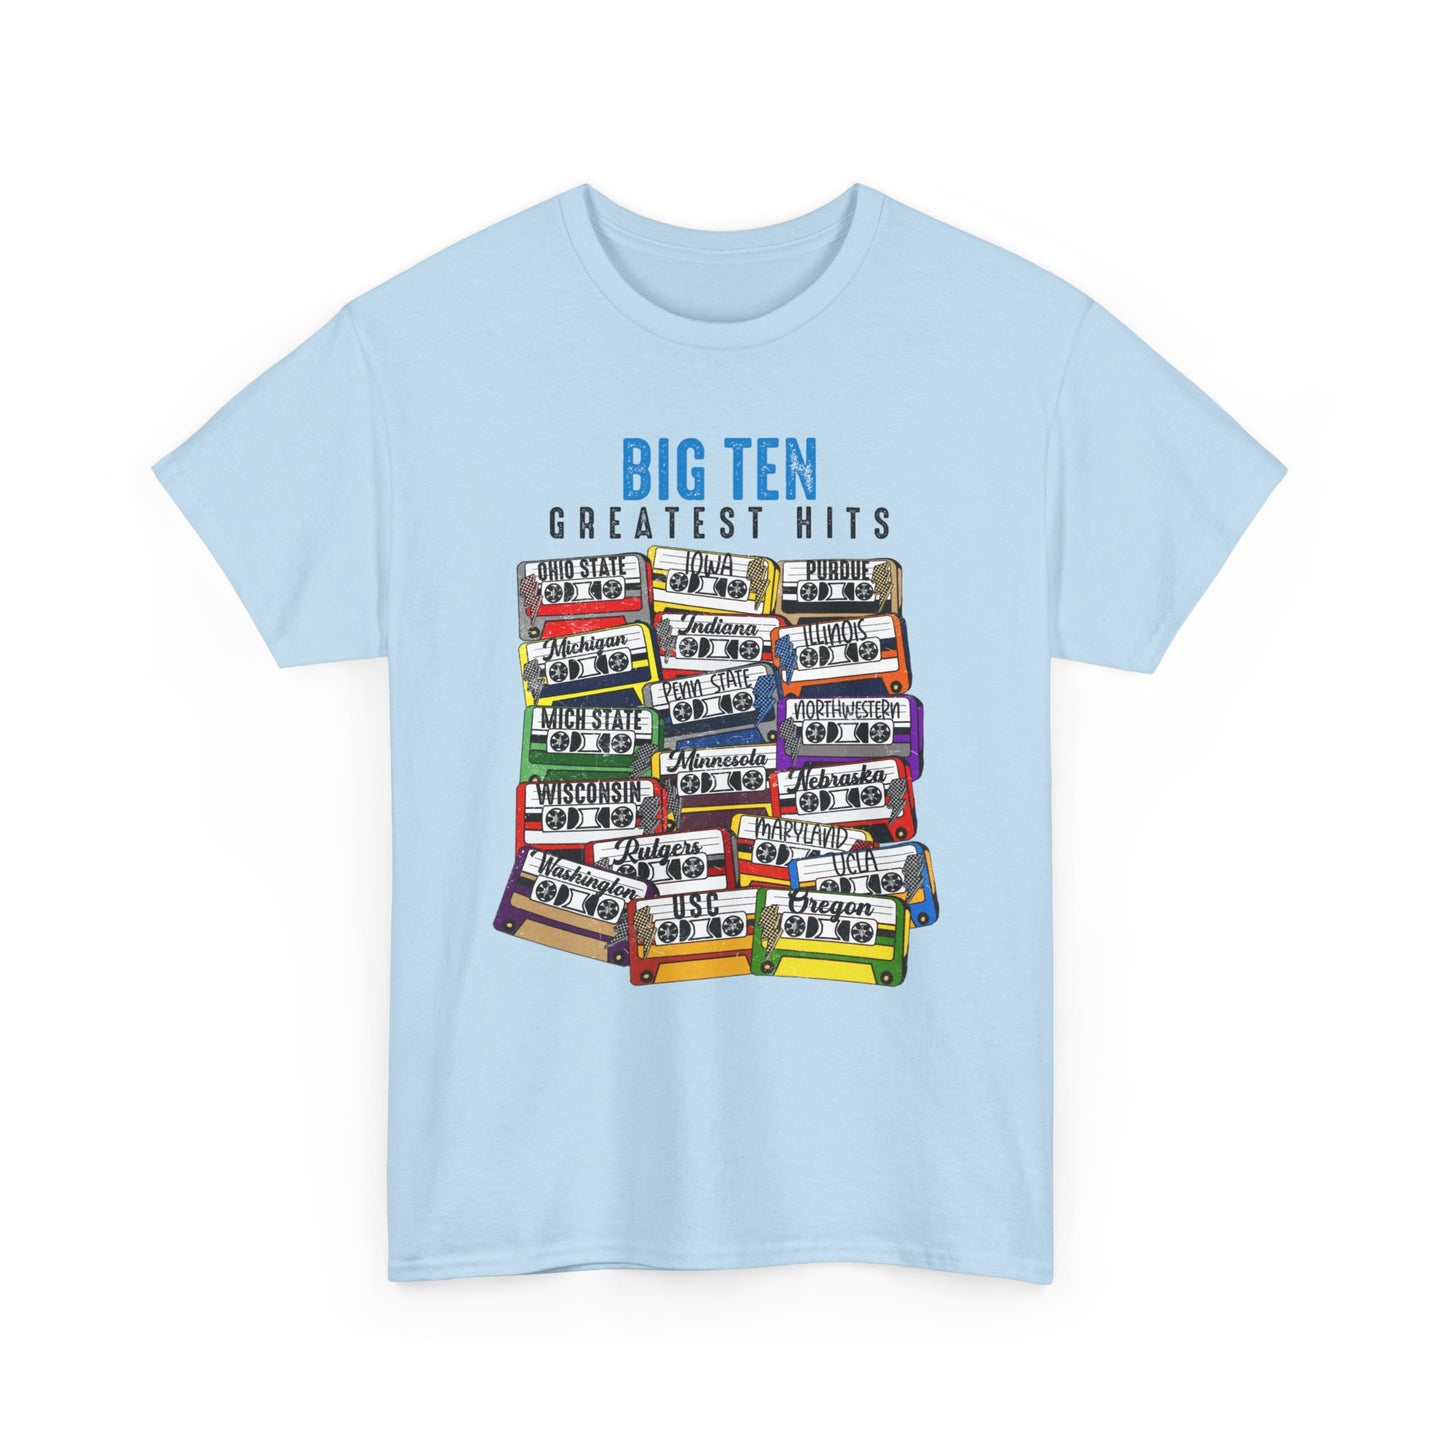 Big Ten Conference Tshirt